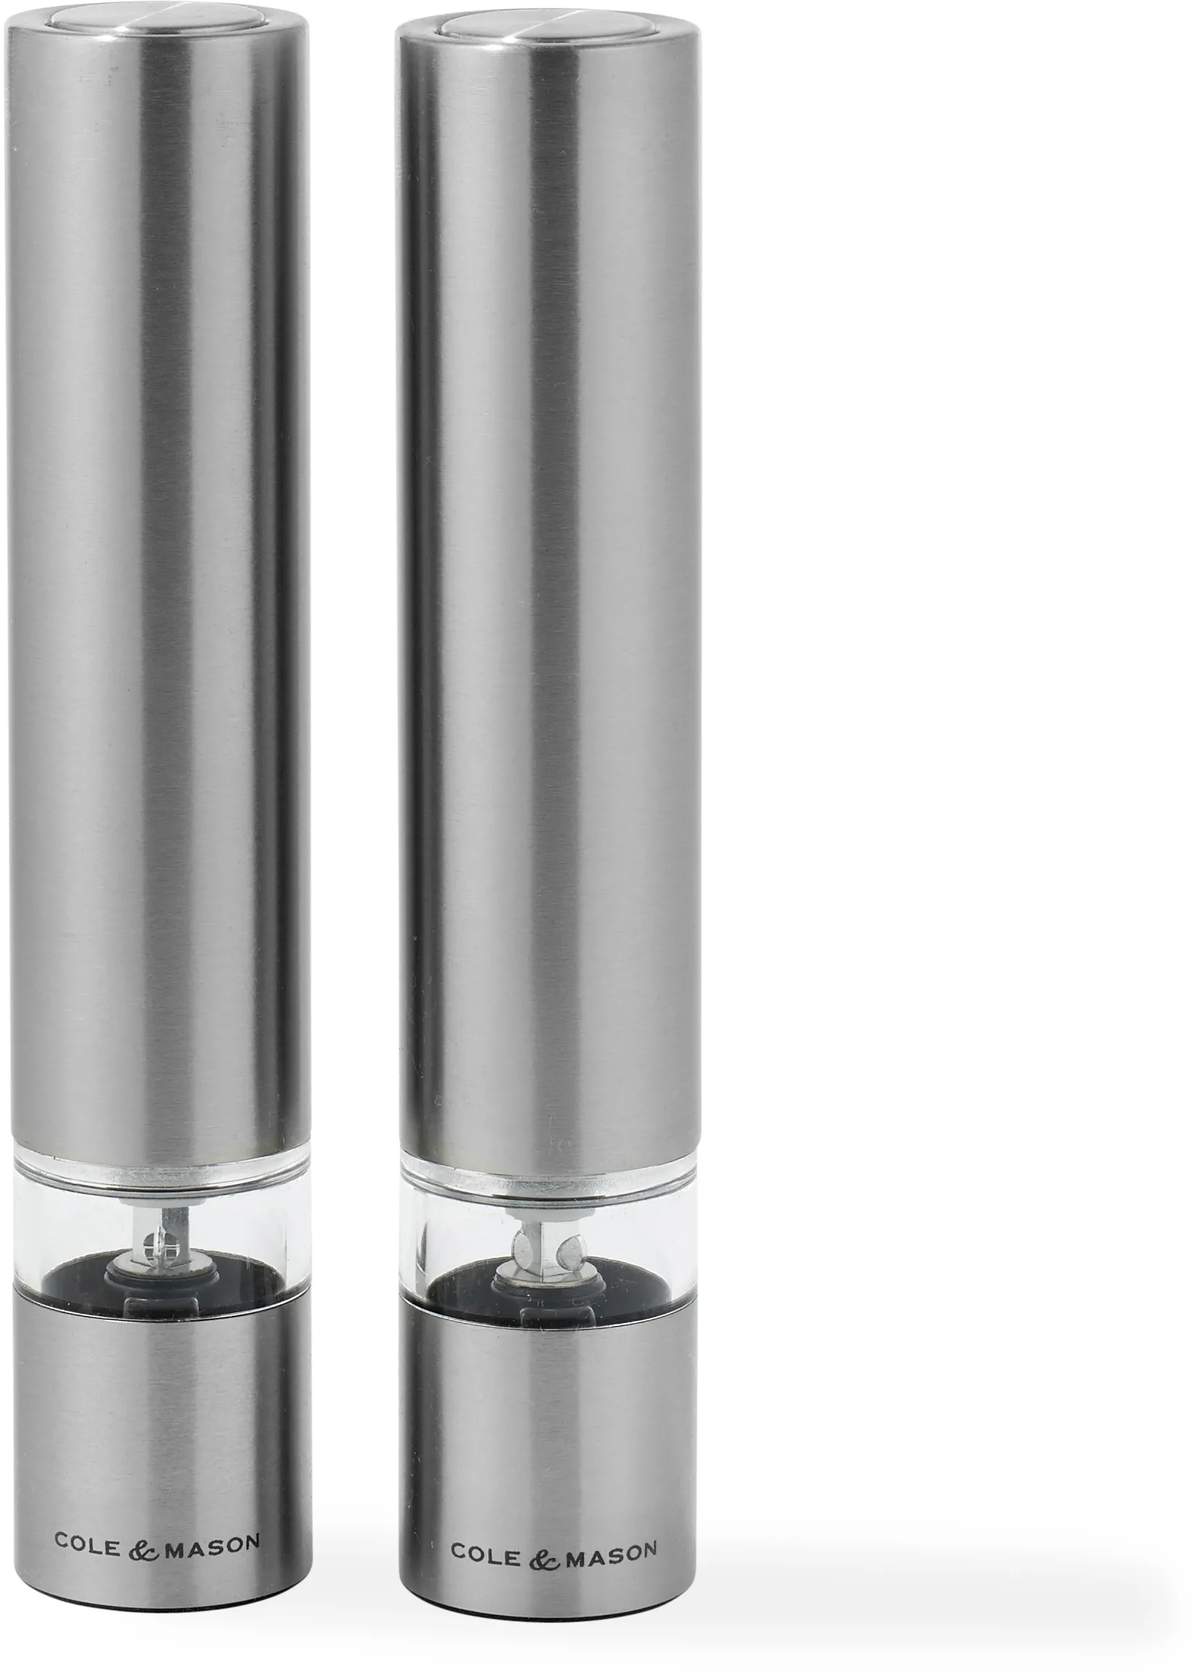 Alternativt forslag nuance gallon Cole & Mason - Chiswick Elektrisk Kværnsæt - 2 dele - H 17,5 cm -  Stål/akryl | Imerco